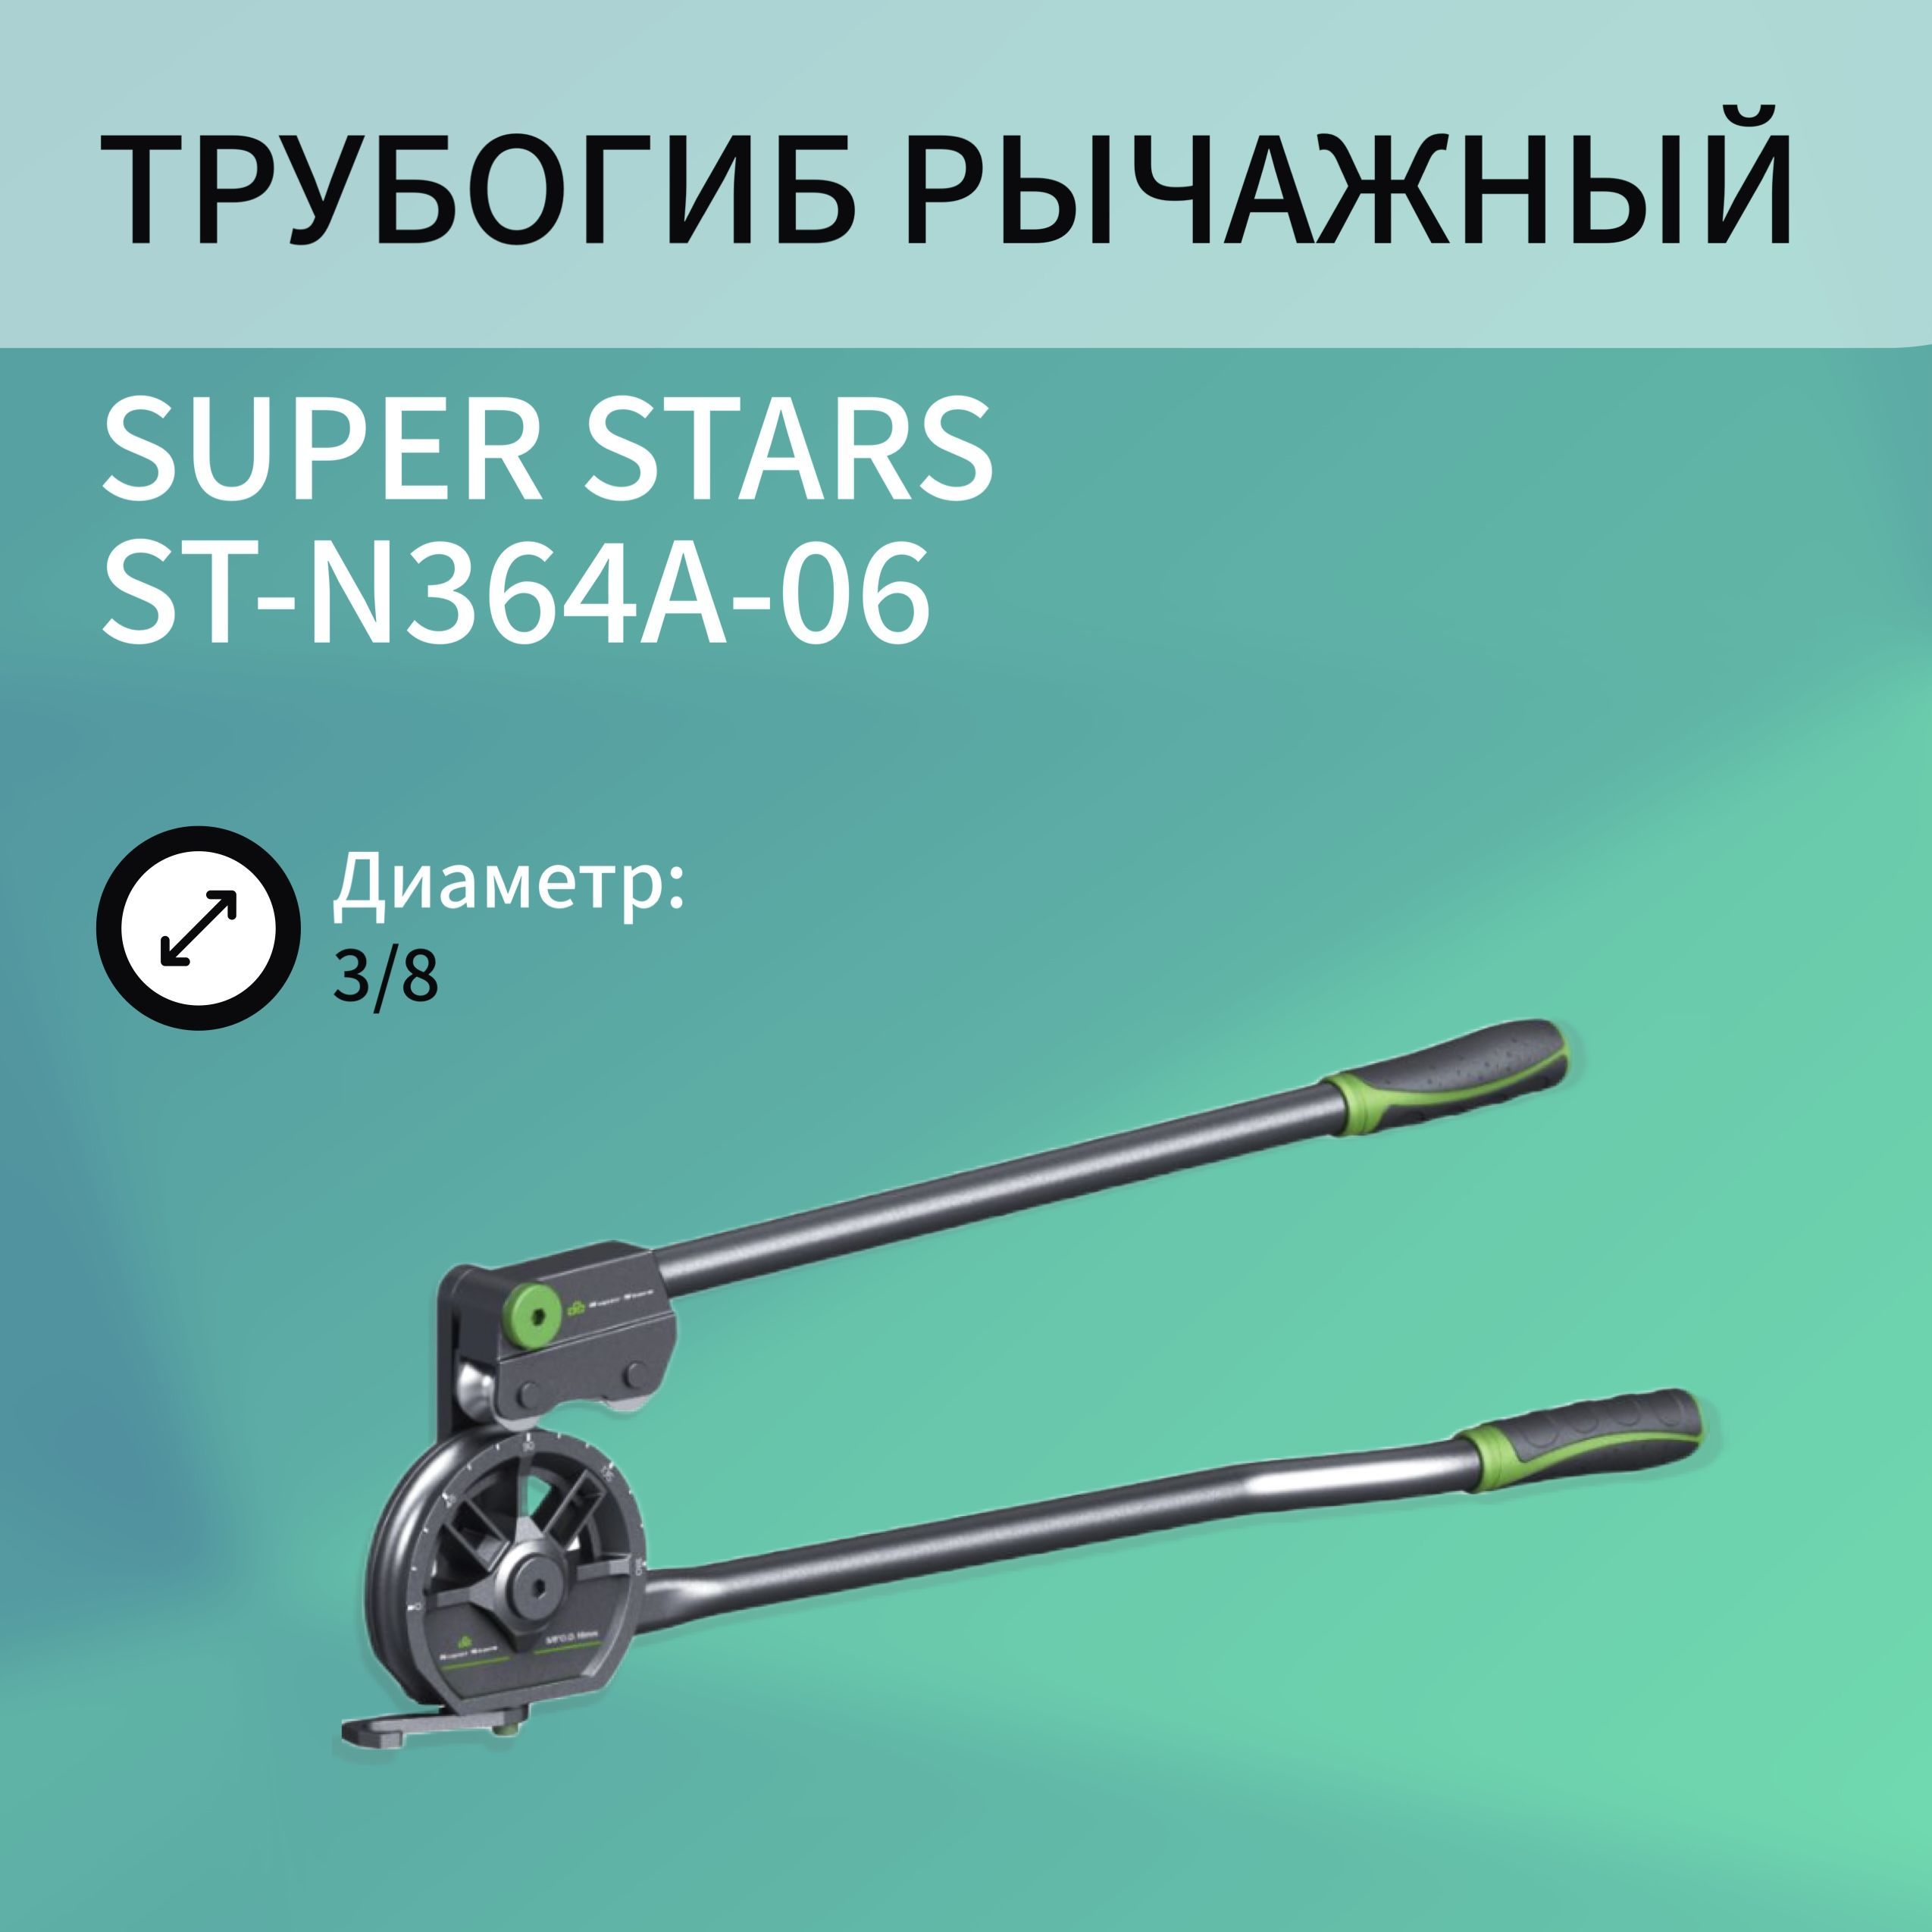 Трубогиб рычажный SUPER STARS ST-N364A-06, диаметр 3/8